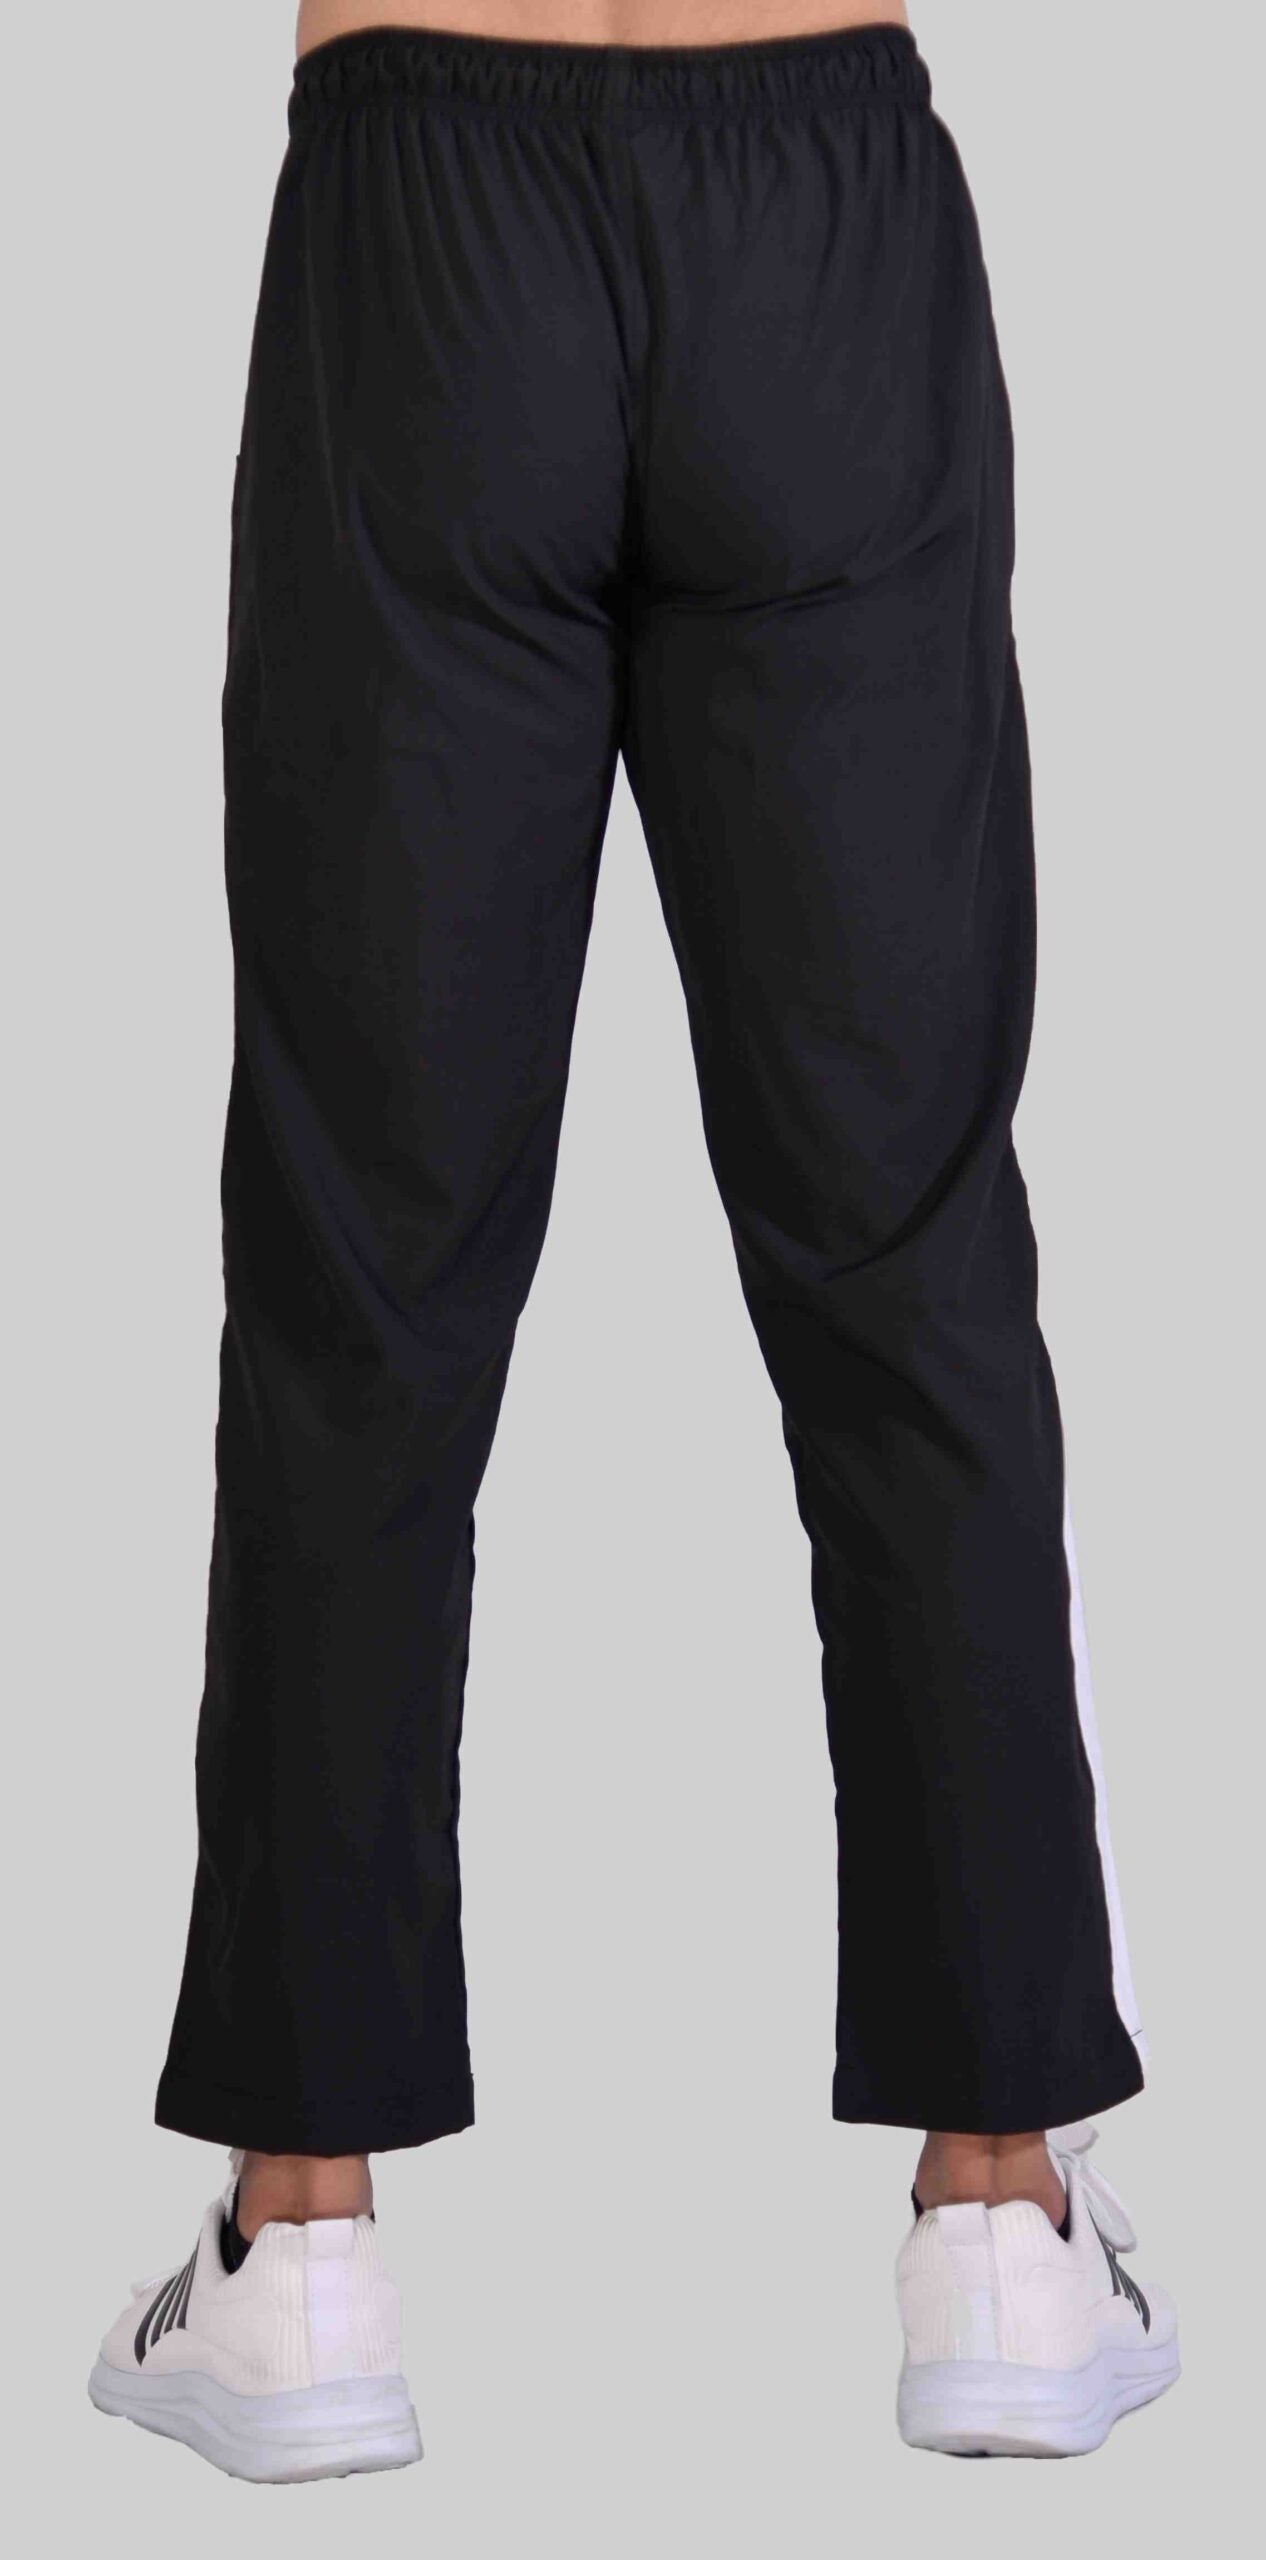 SG Loose Fit Trouser 1.0 (Black & White)